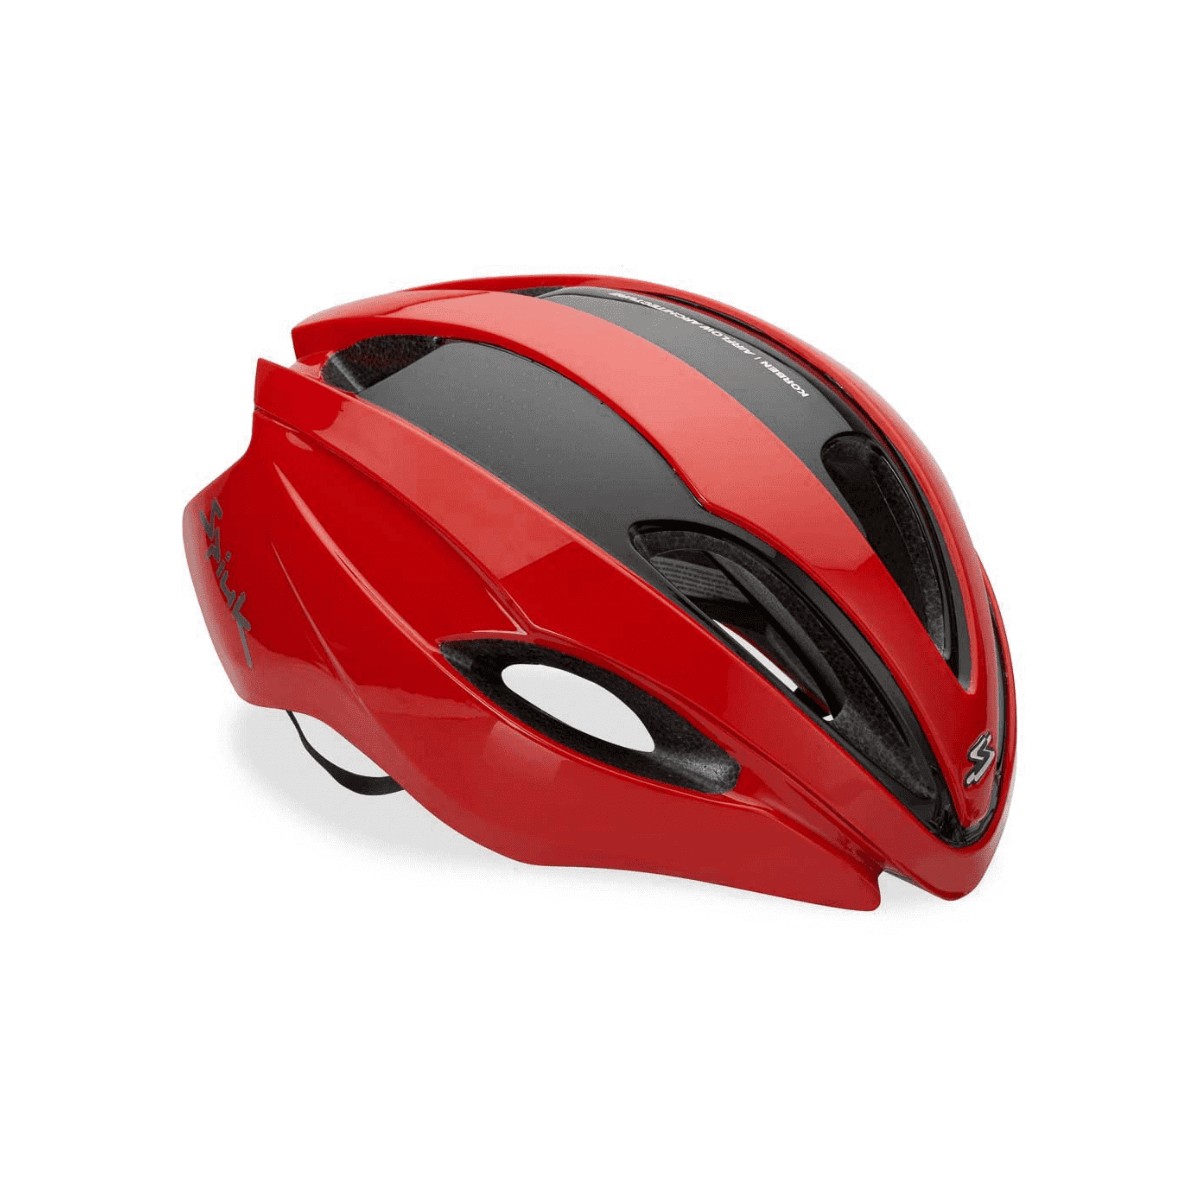 Spiuk Korben Red Helmet, Size S/M (51-56 cm)